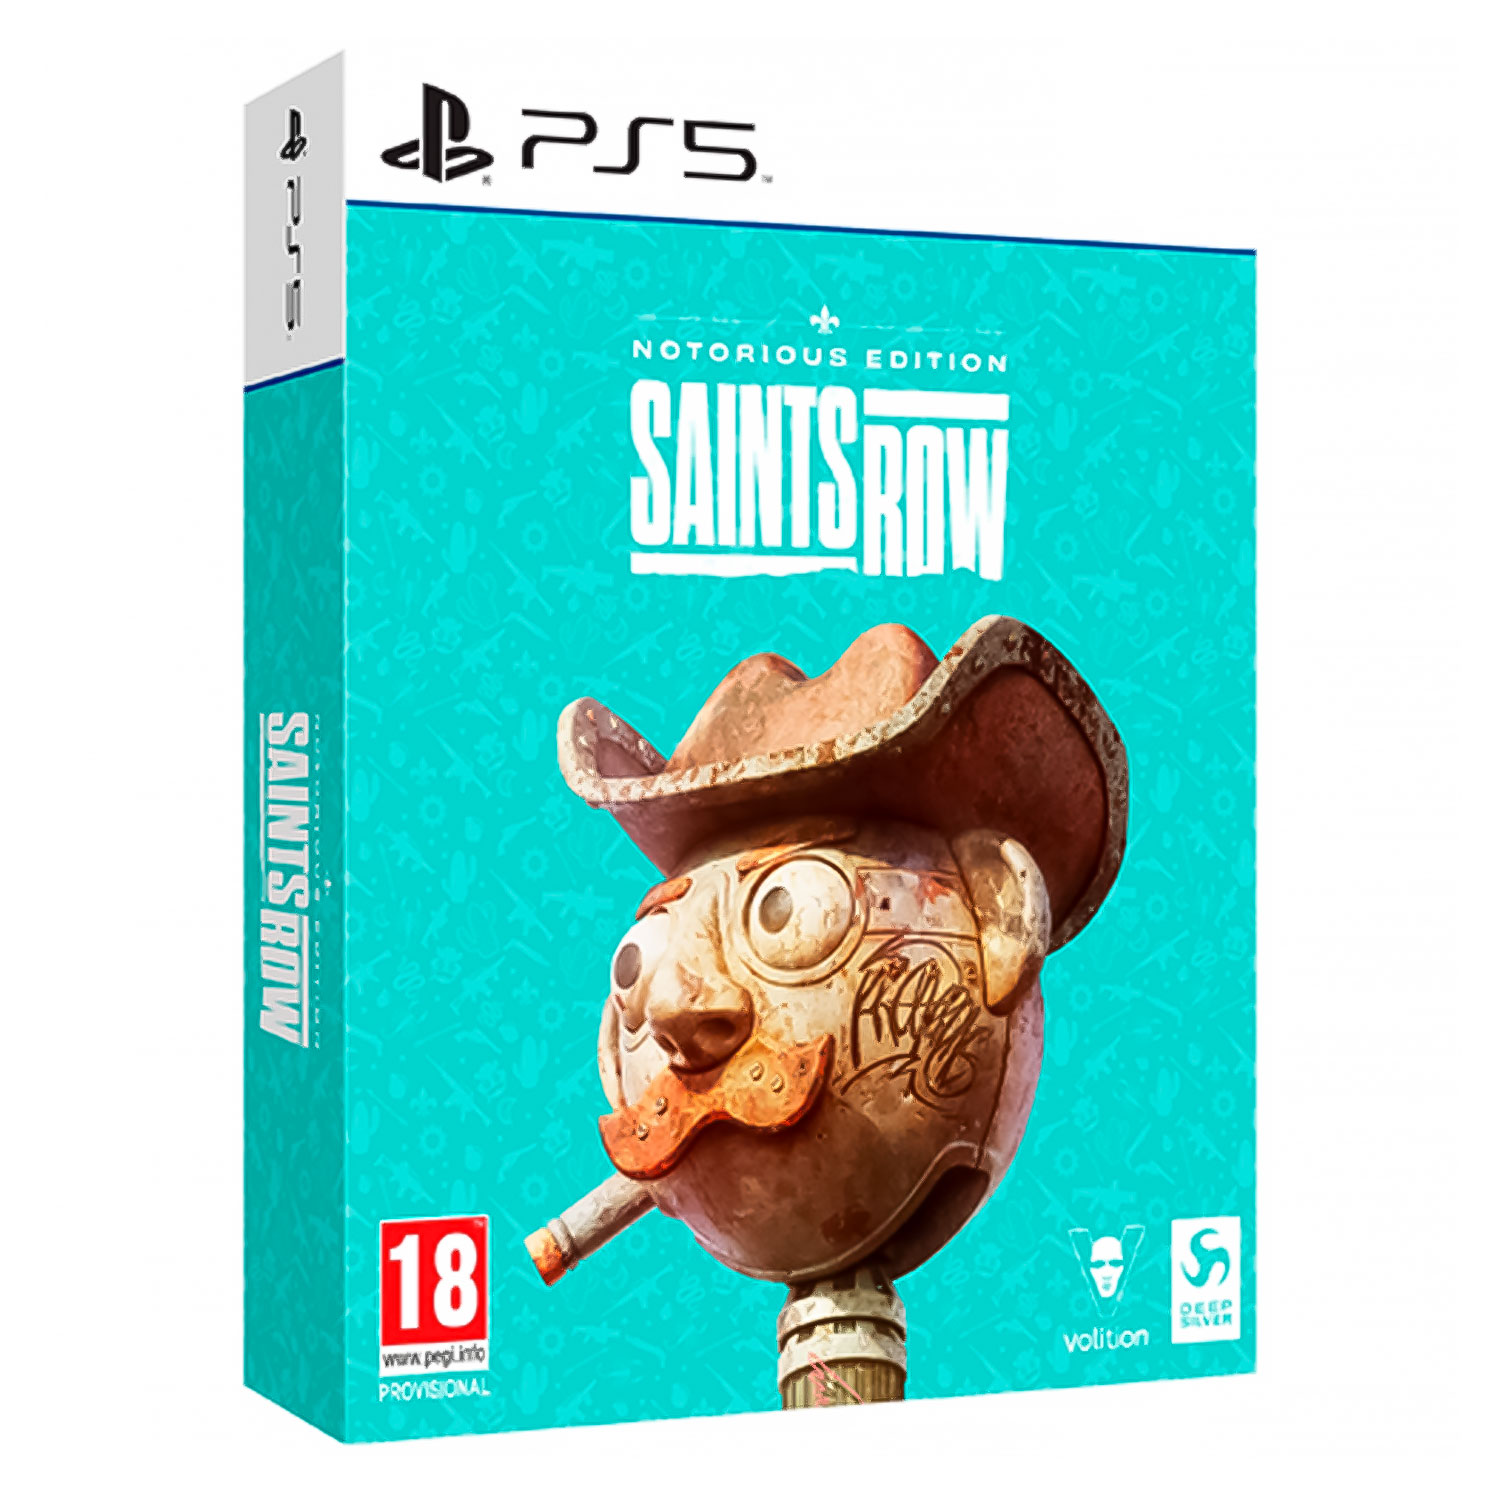 Jogo Saints Row Notorious Edition para PS5